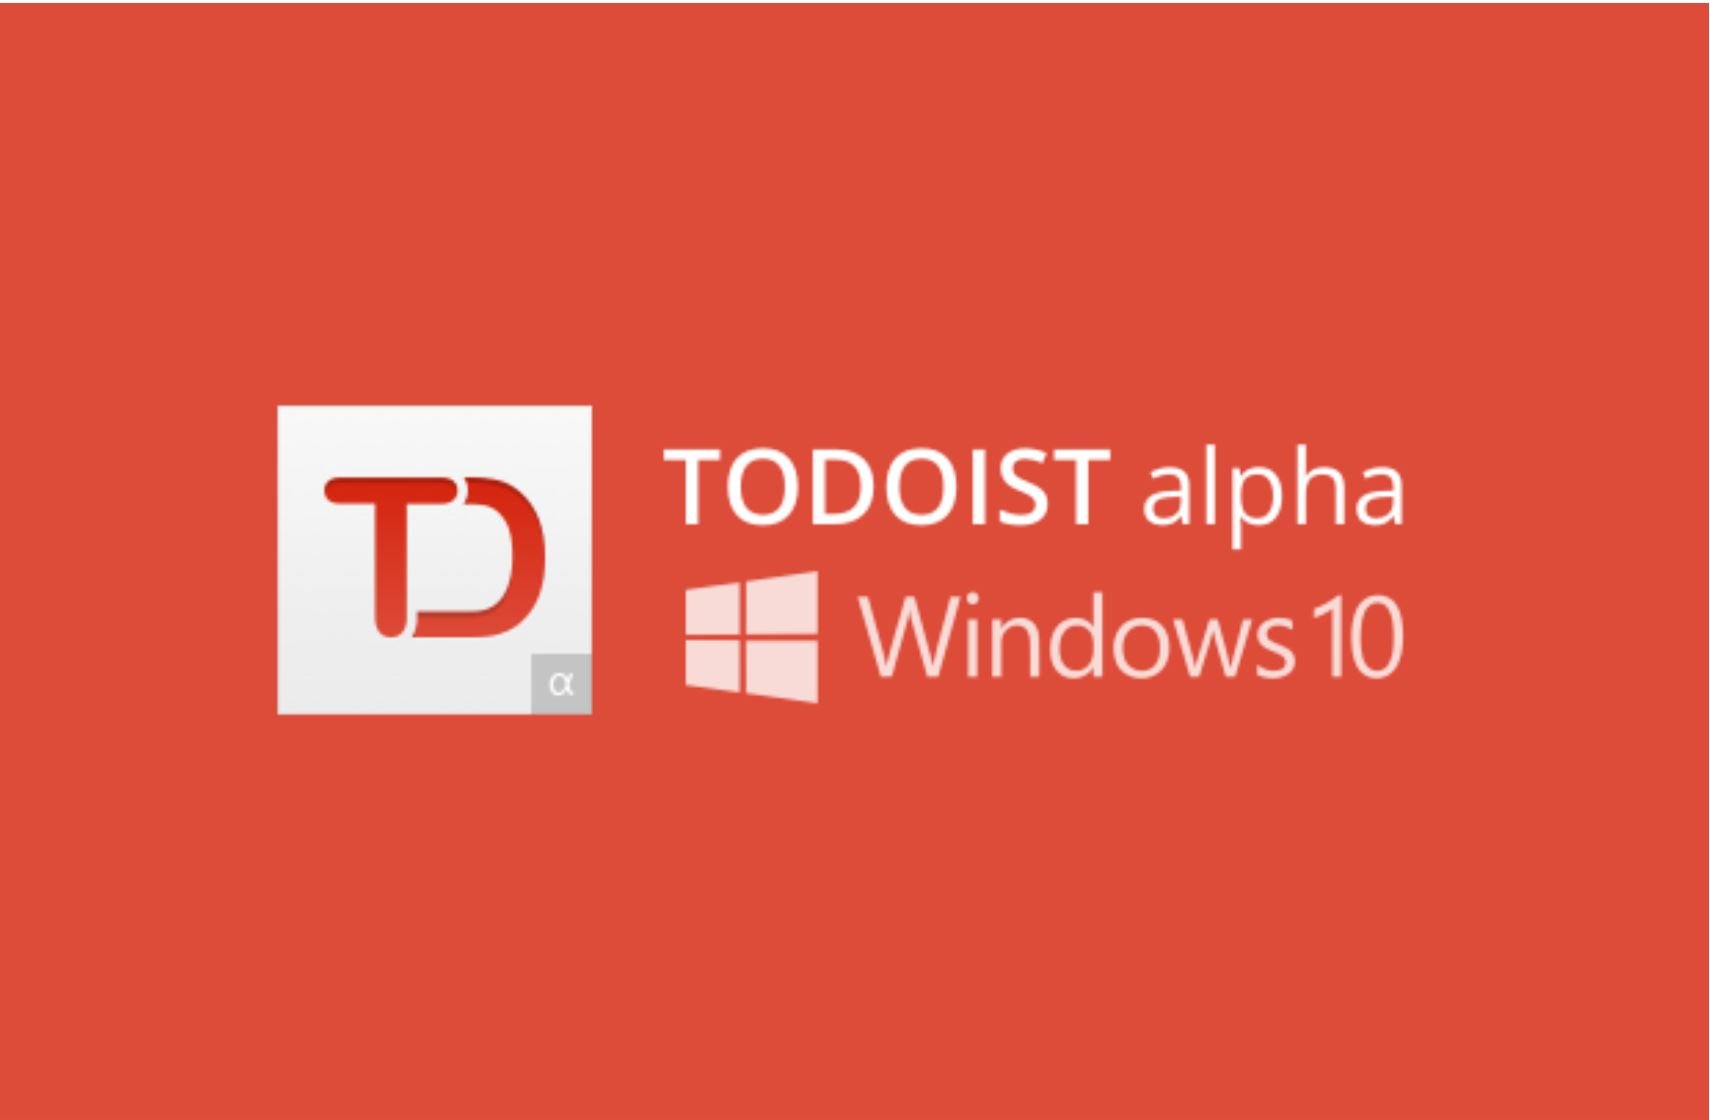 todoist-alpha-windows-10.JPG